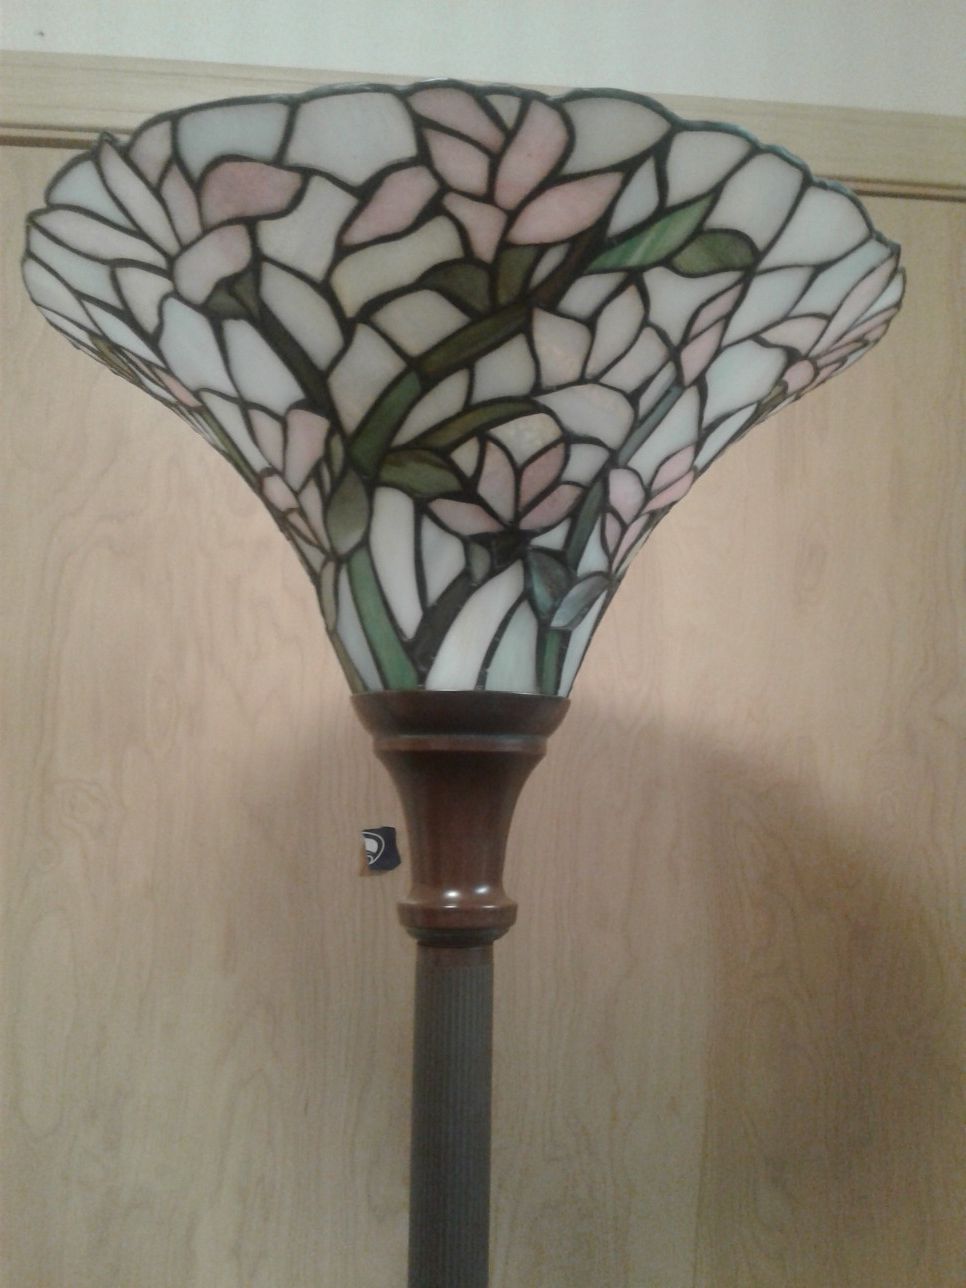 Tiffany style pole lamp**PENDING PICK UP**